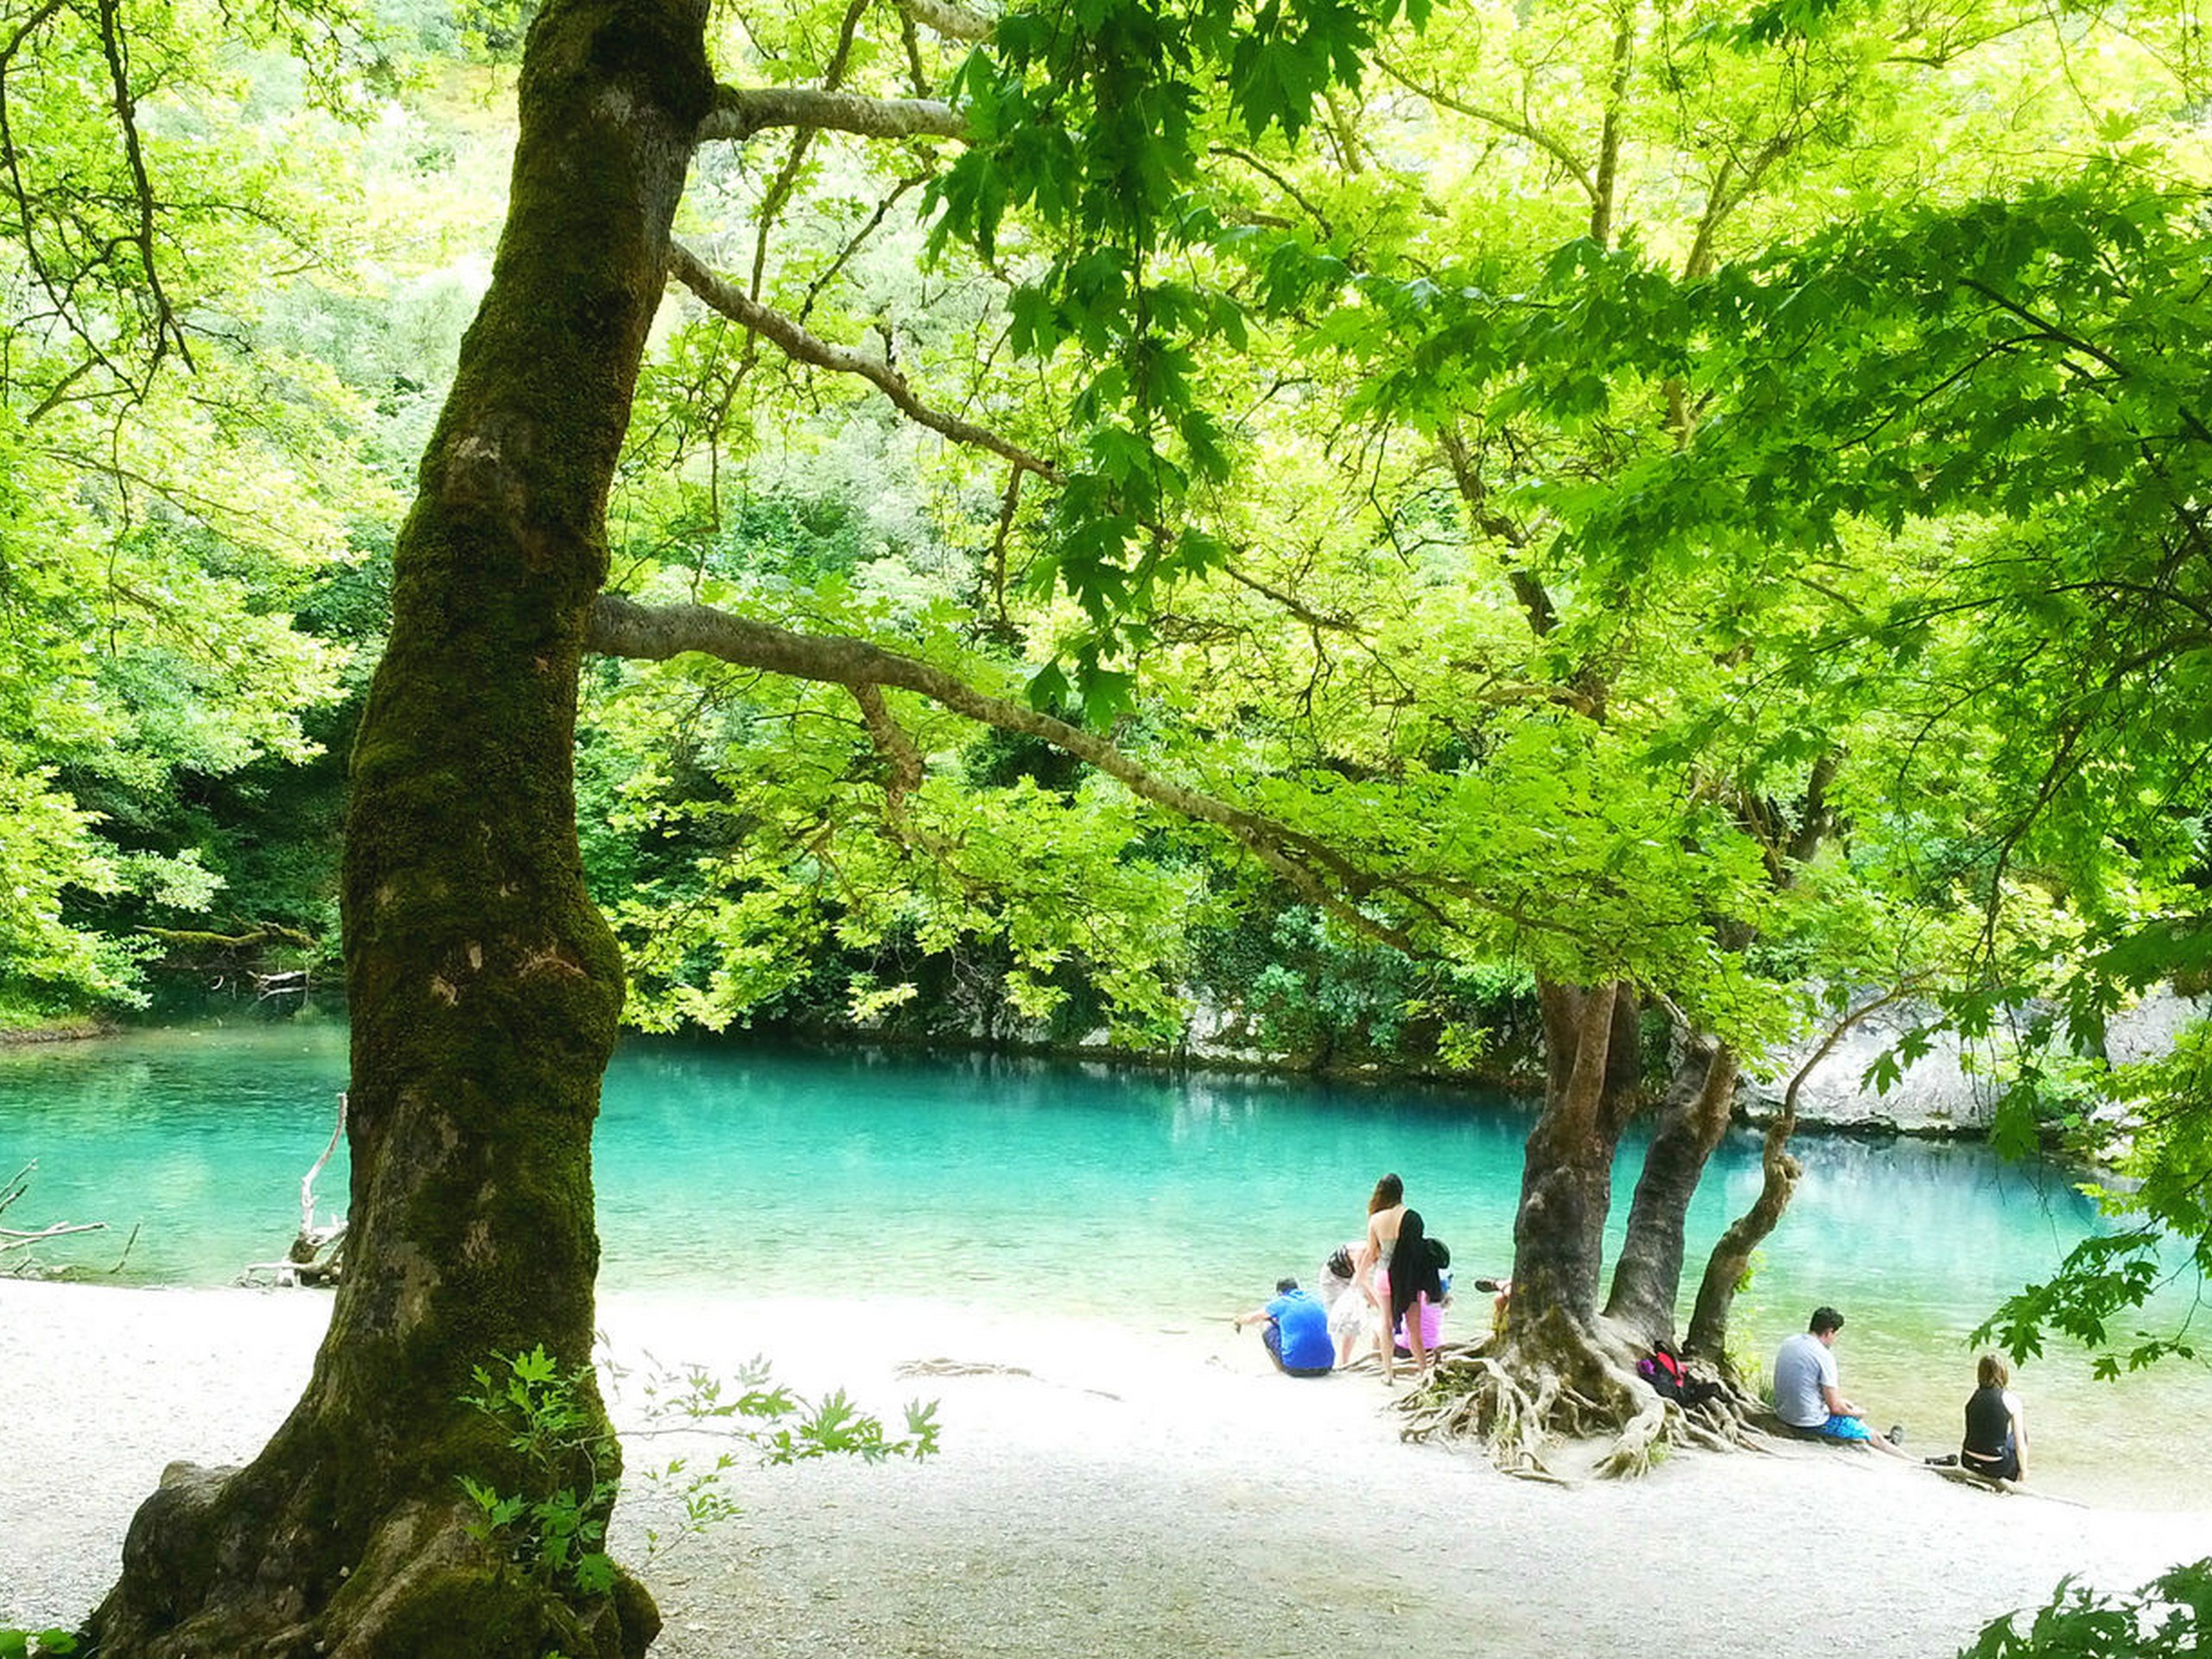 Turquoise creek in Greece